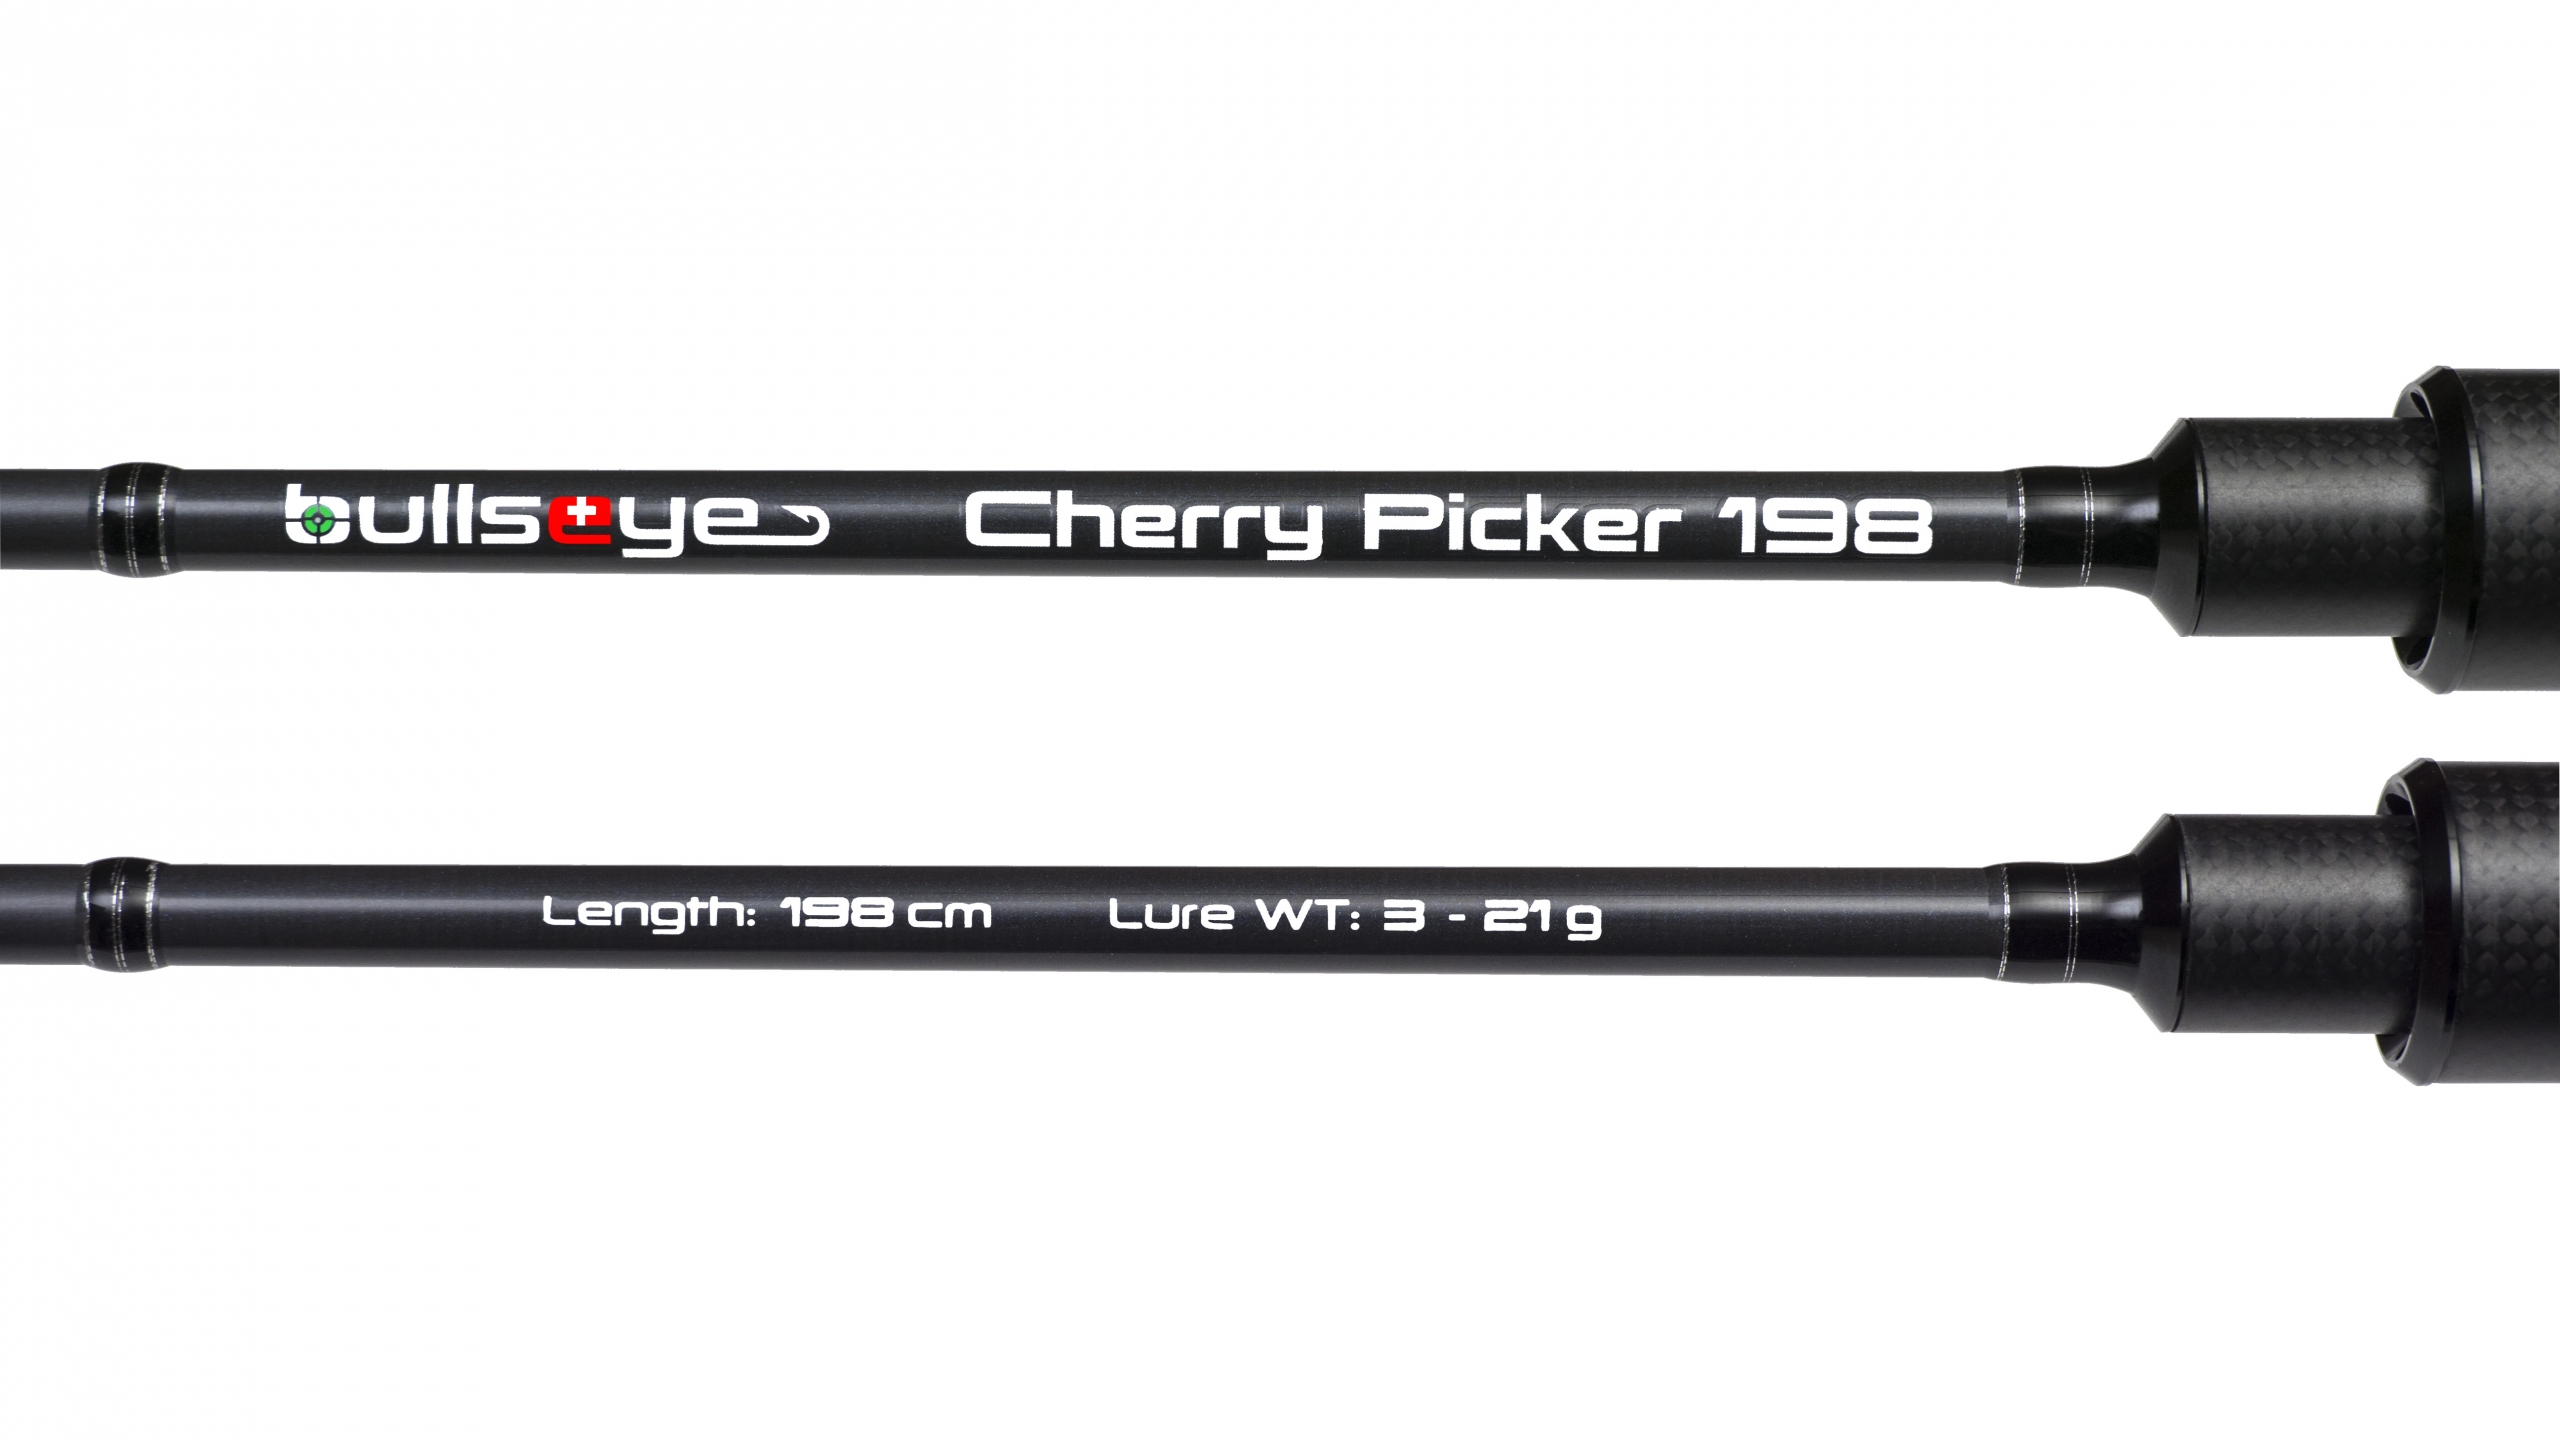 Cherry Picker 198 3-21g